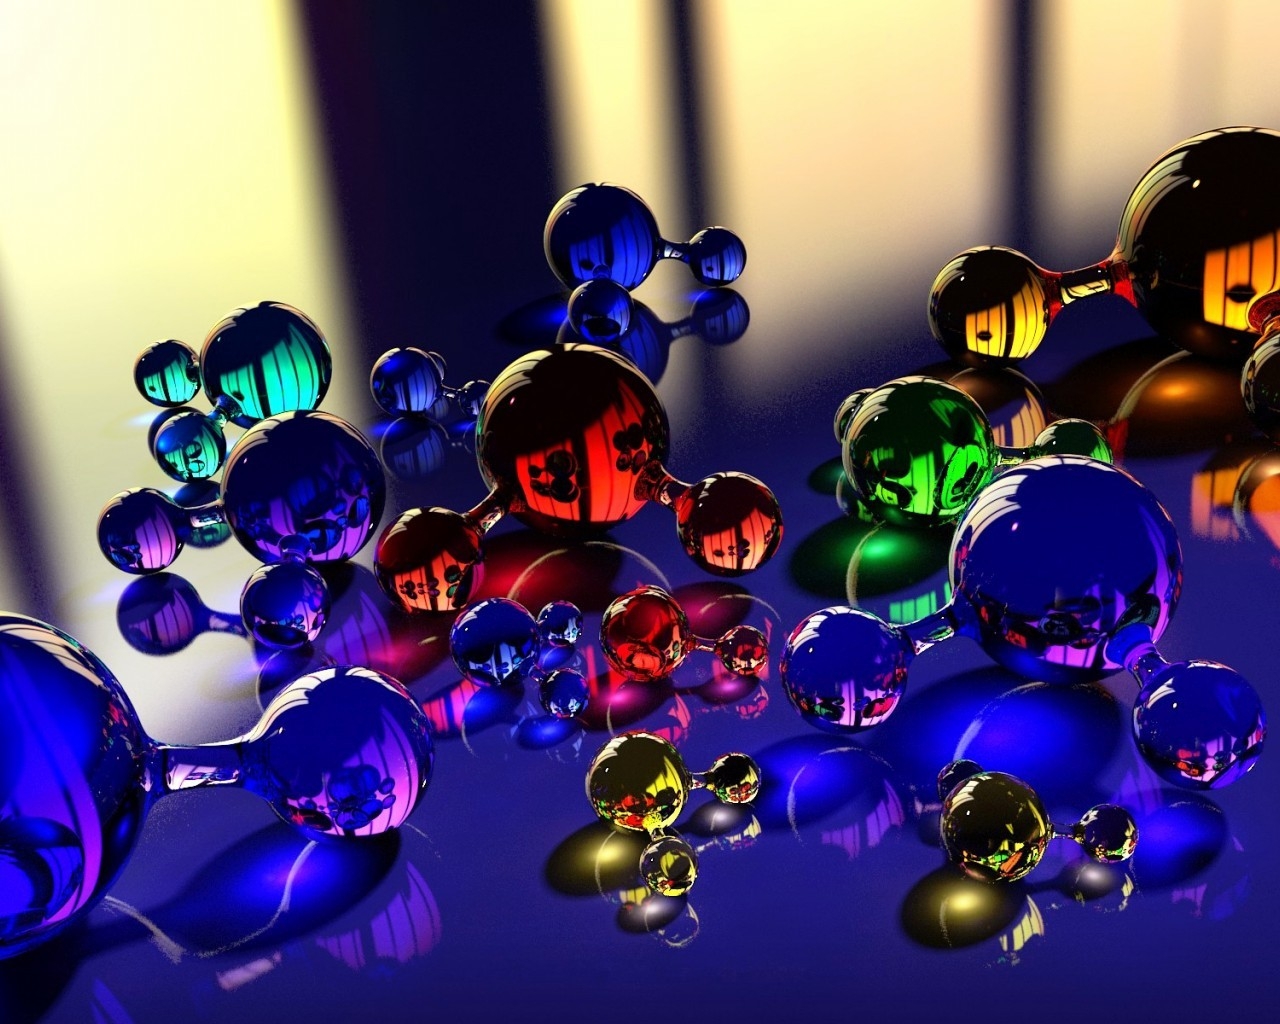 Molecule Stress Ball for 1280 x 1024 resolution